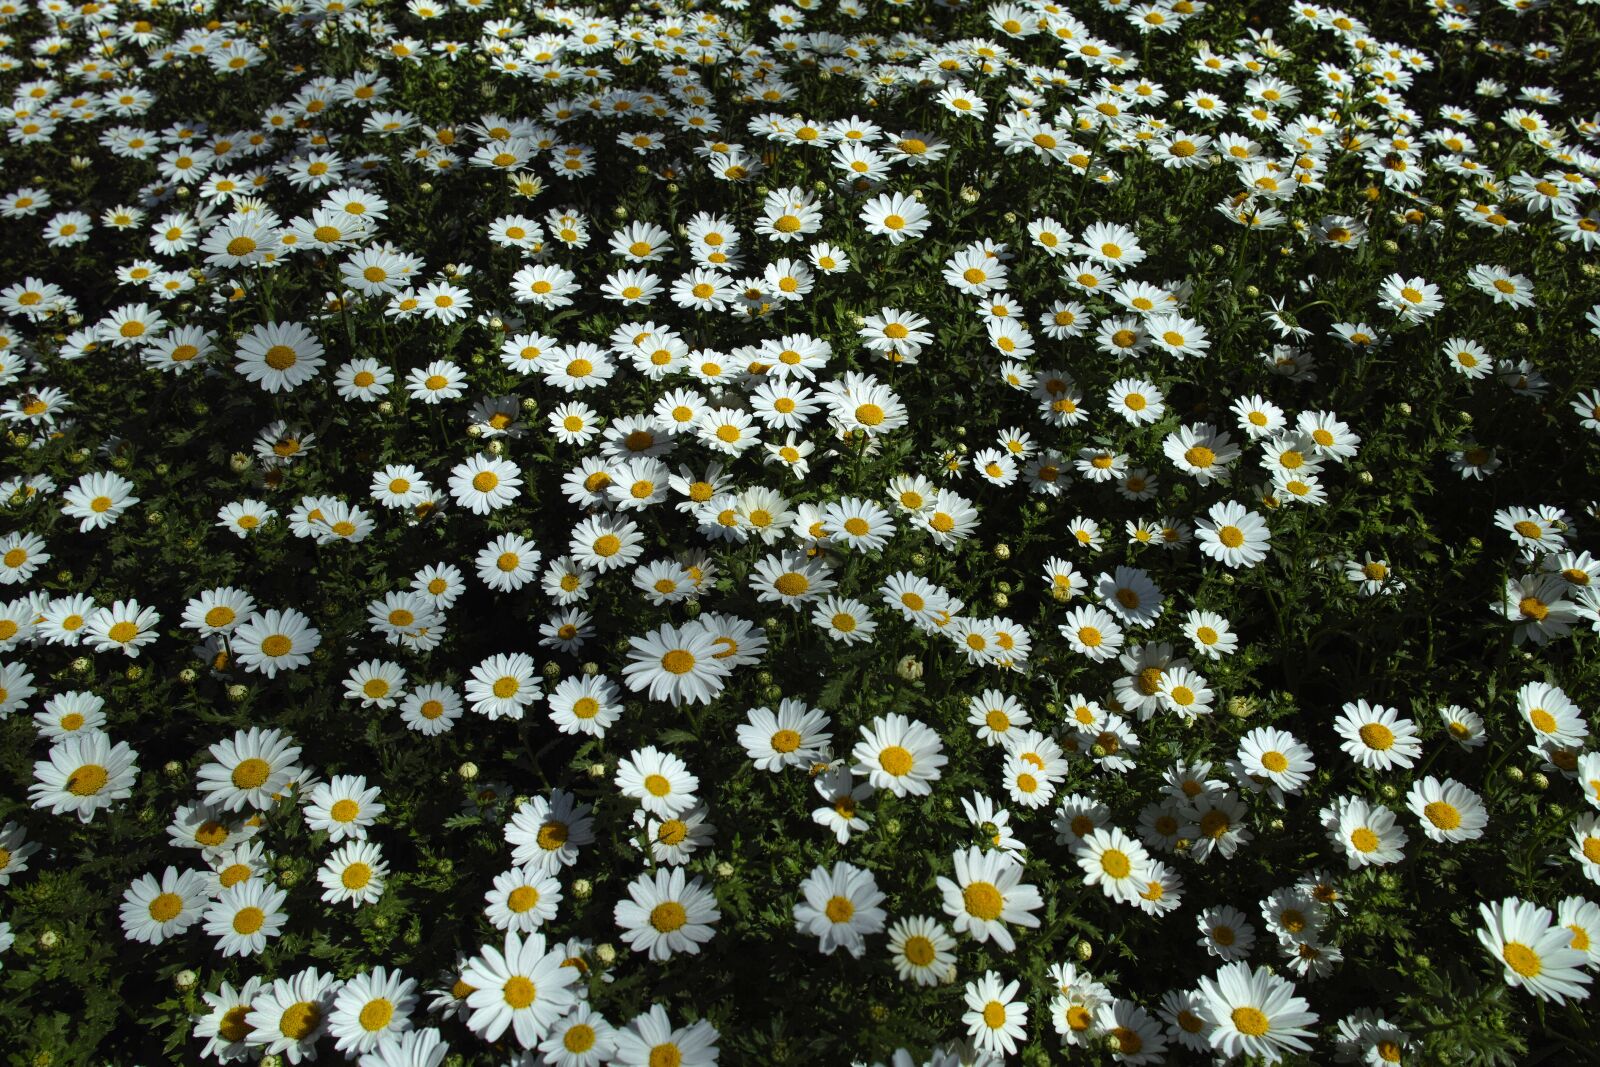 Sigma DP1 Merrill sample photo. Daisy, daisies, flower photography